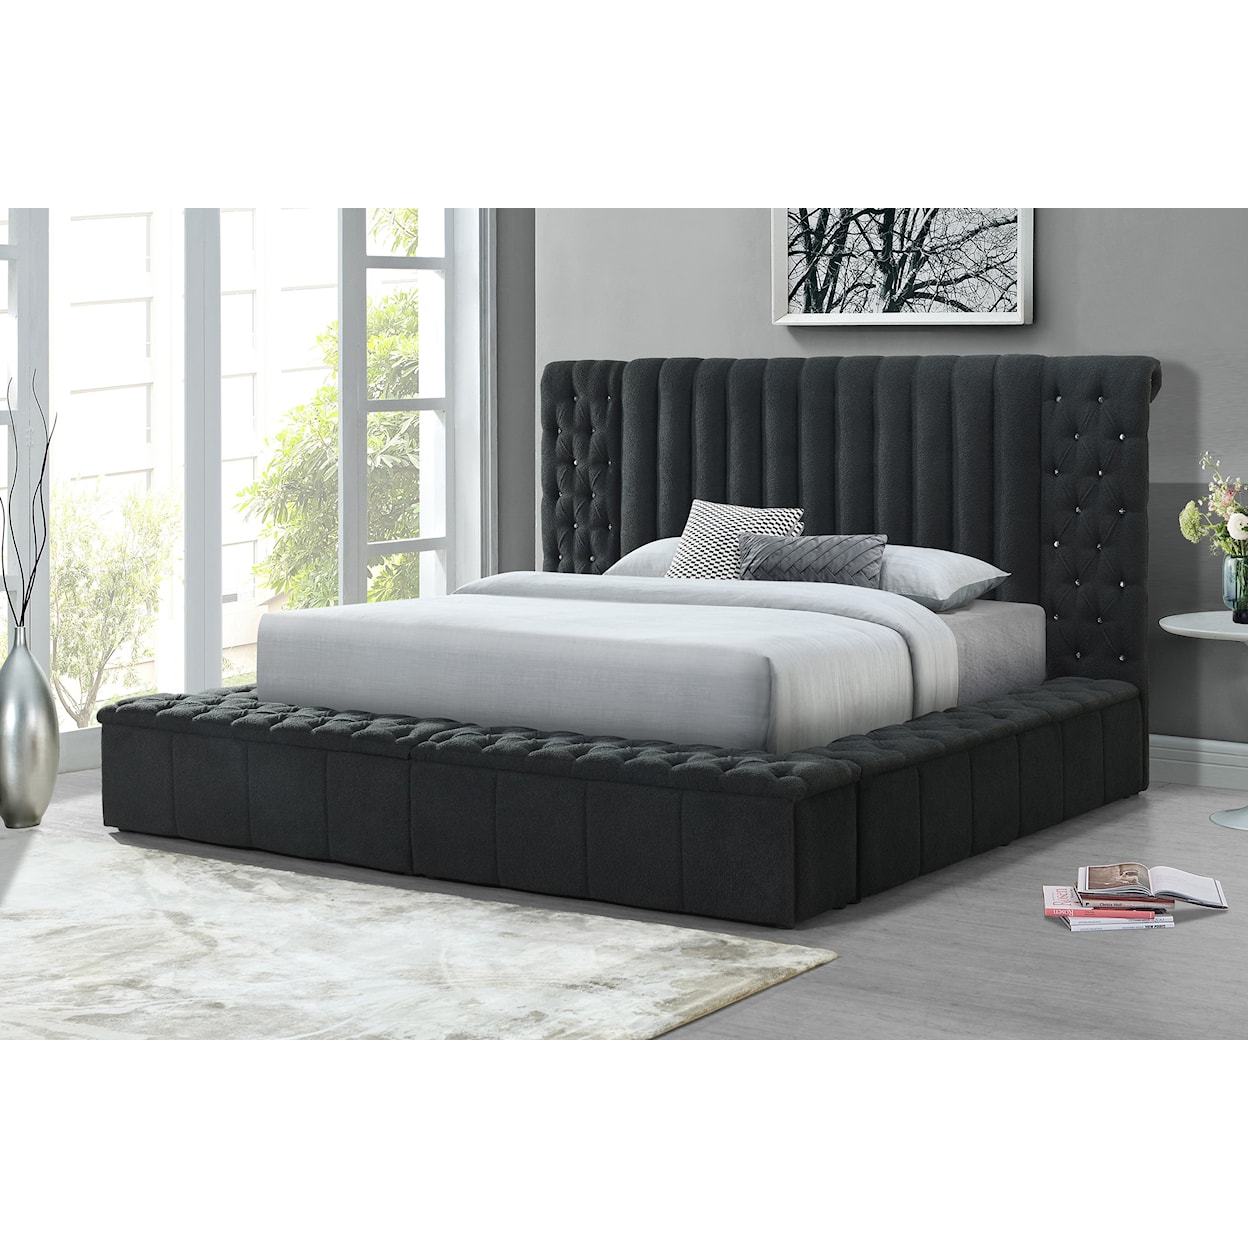 CM DANBURY Upholstered Storage Bed - King